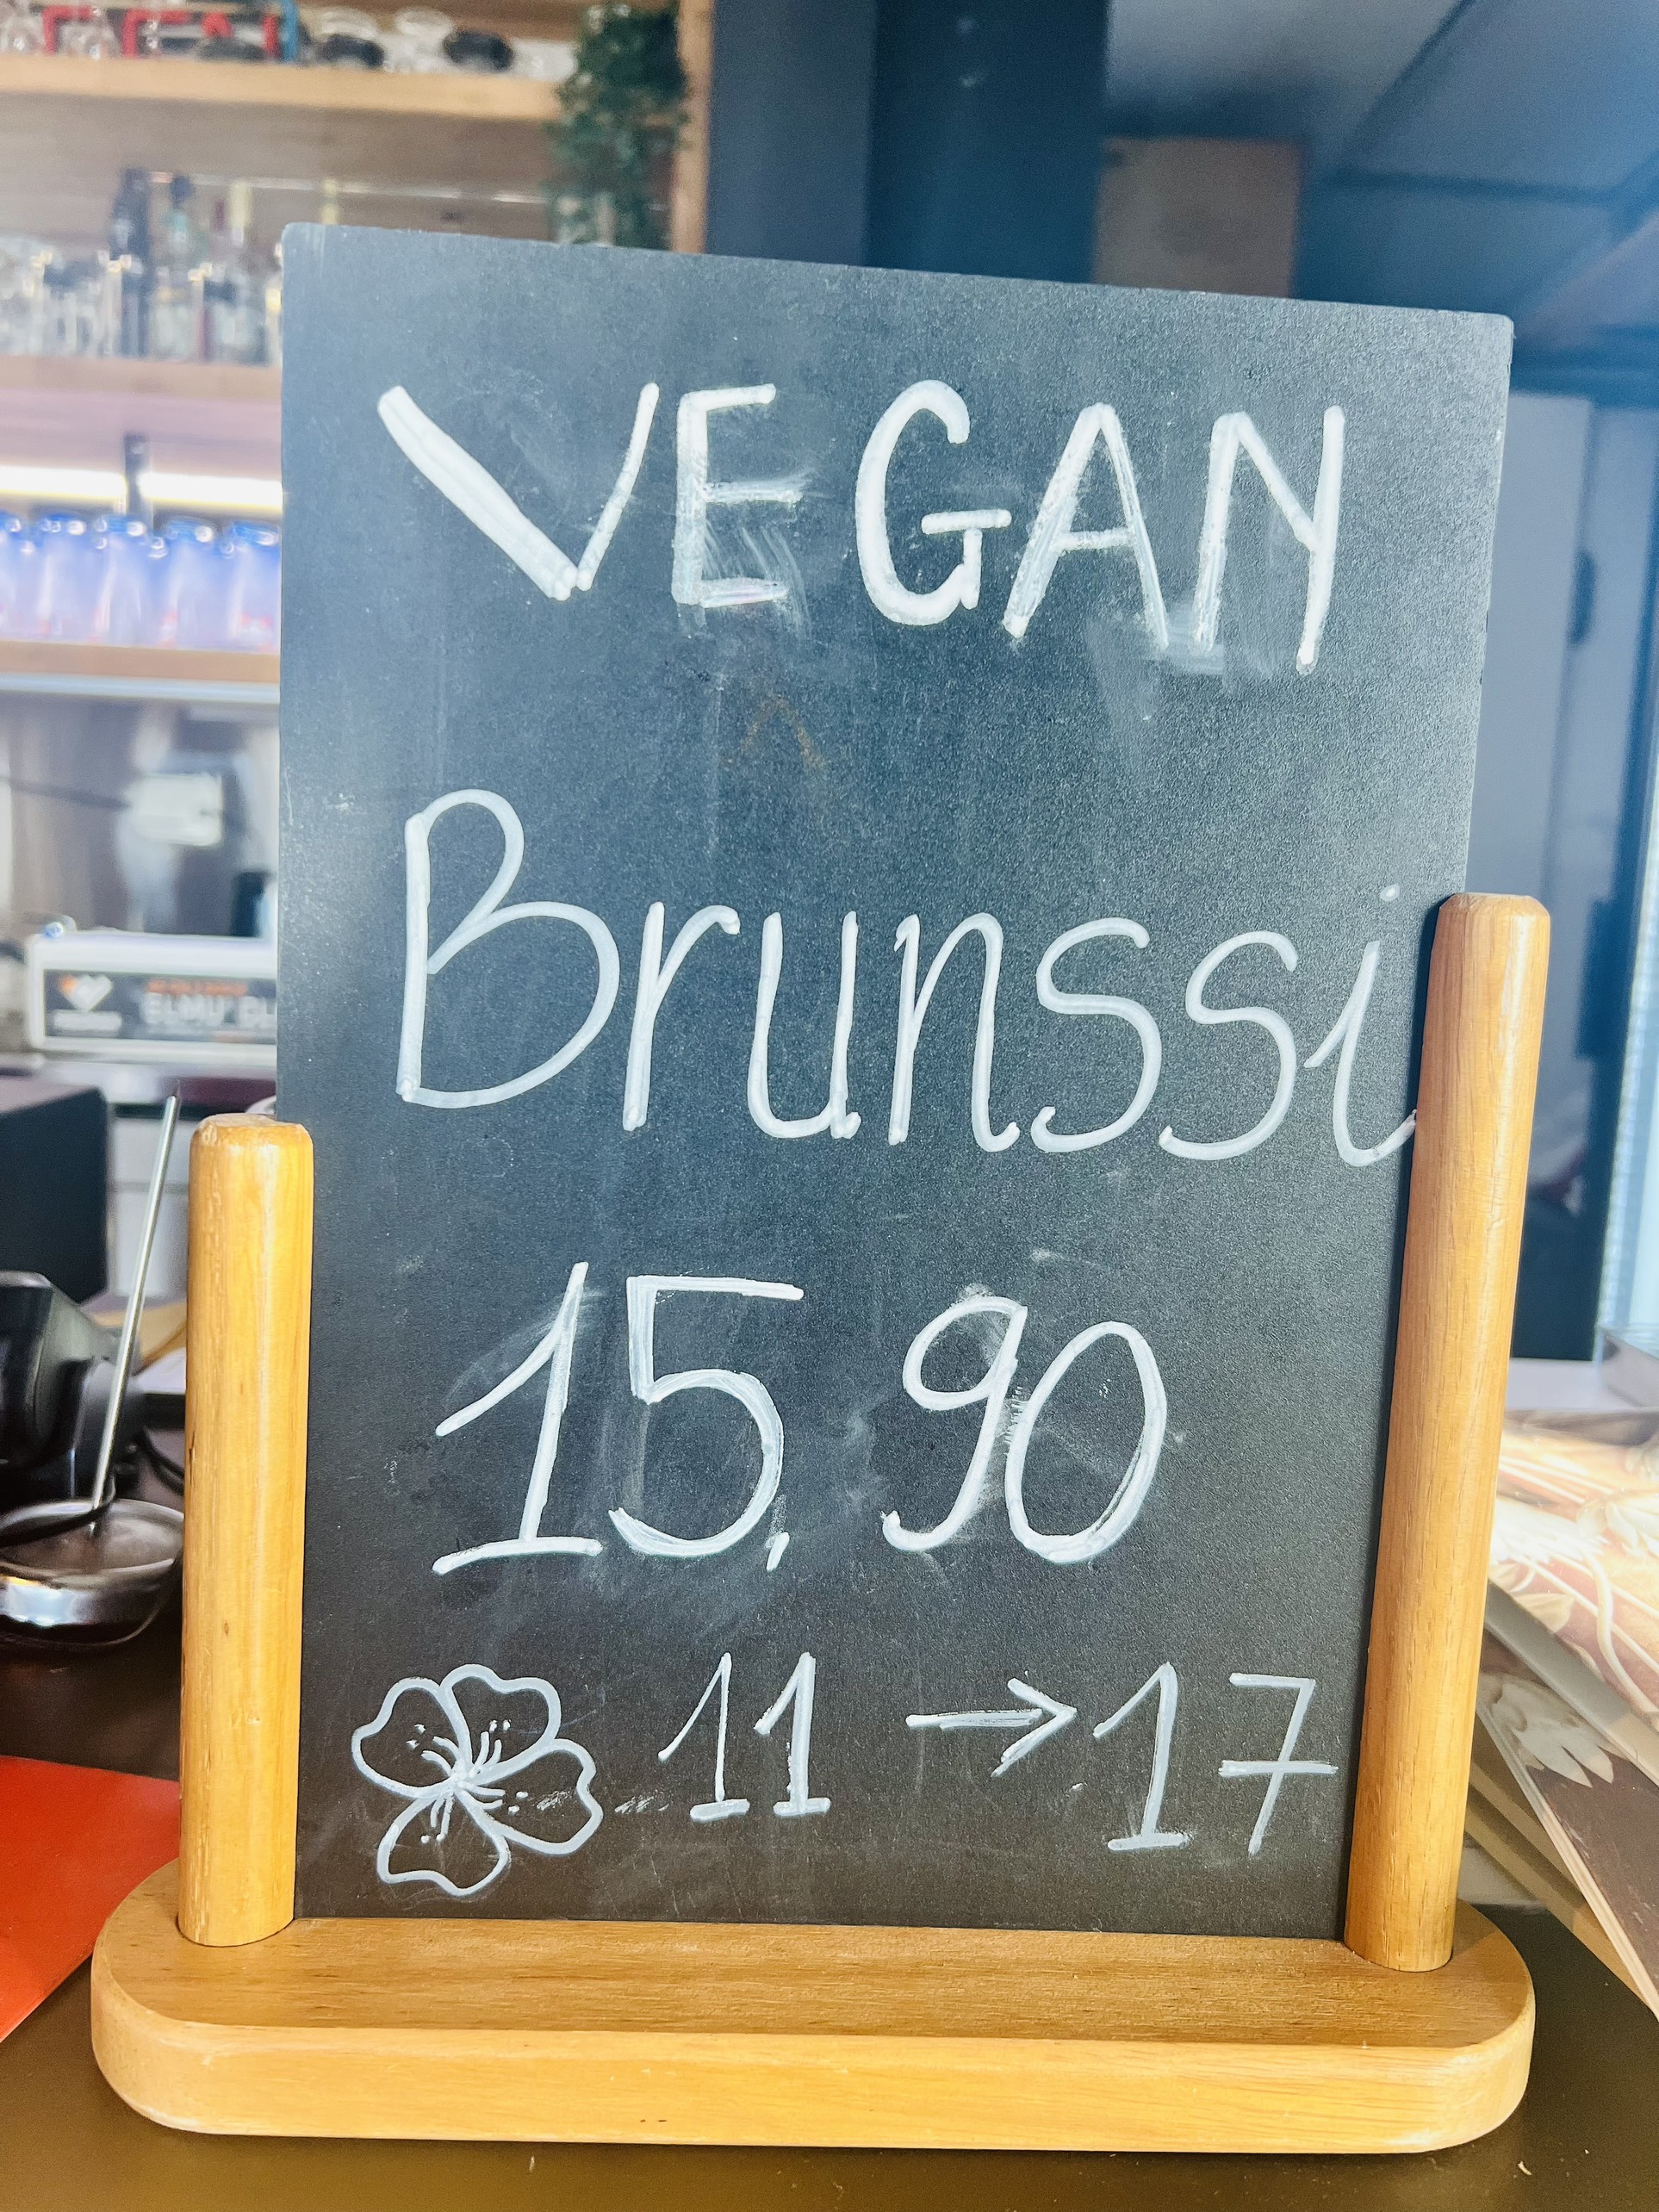 Vegan Brunssi (Only Saturday)